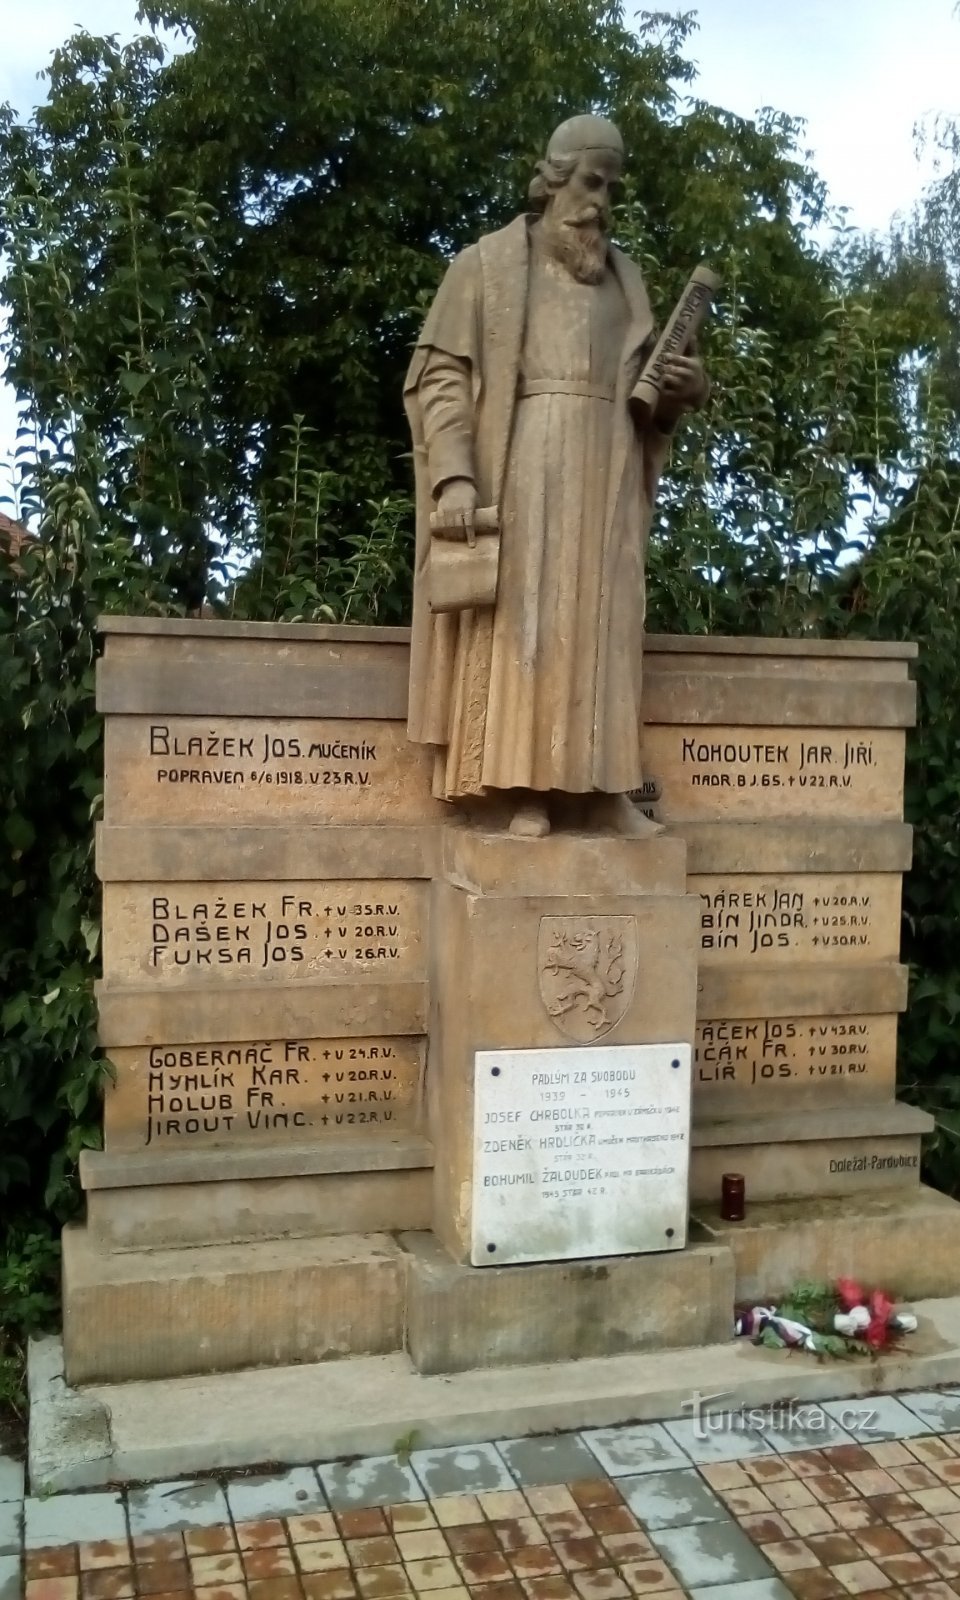 Monumento a JAKOmenský e 15 caídos na Primeira Guerra Mundial em Mnětice